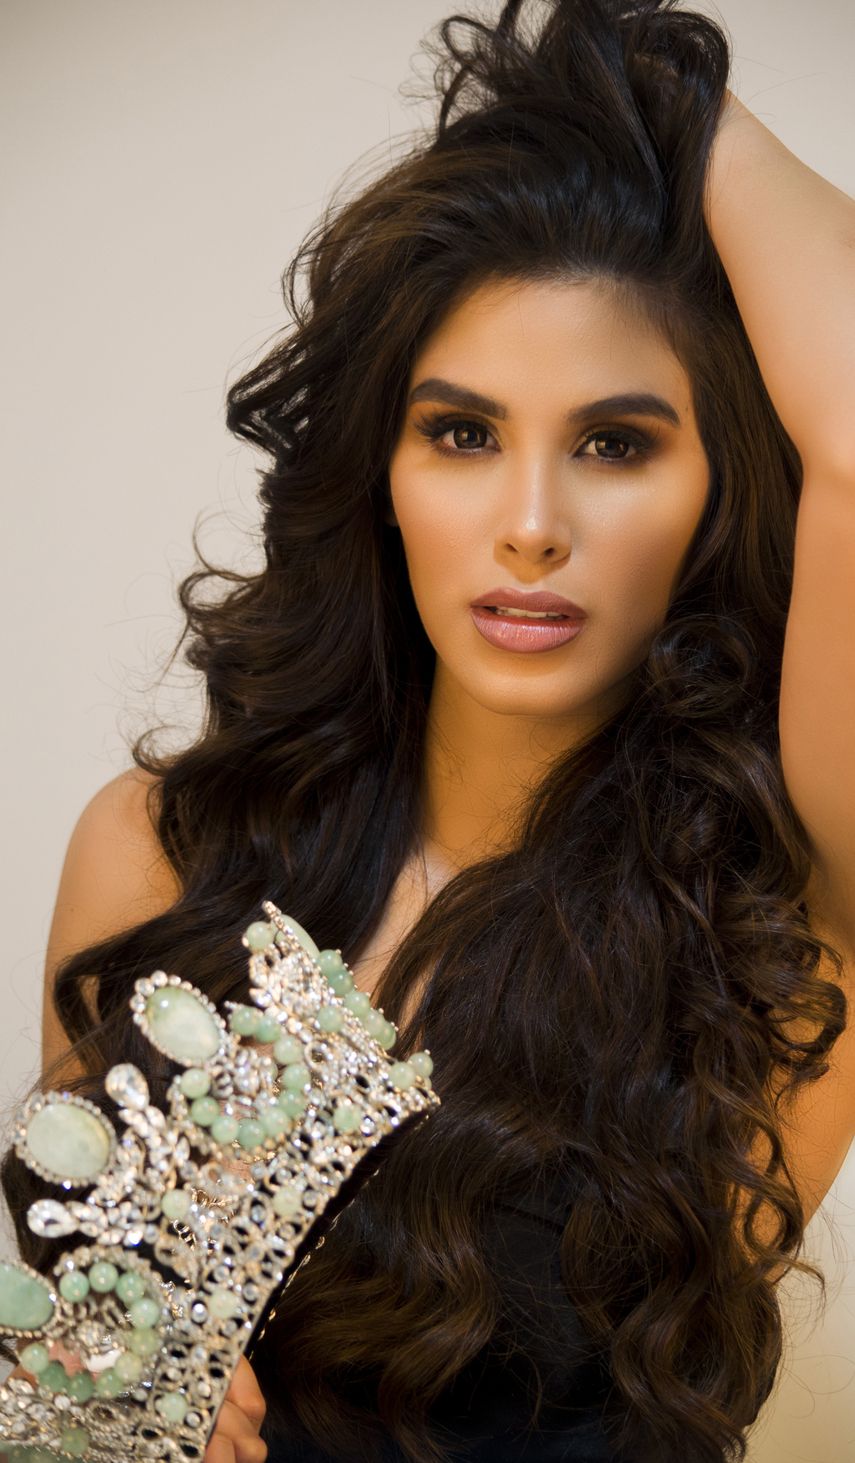 Miss Earth Venezuela 2019 Michelle Castellanos